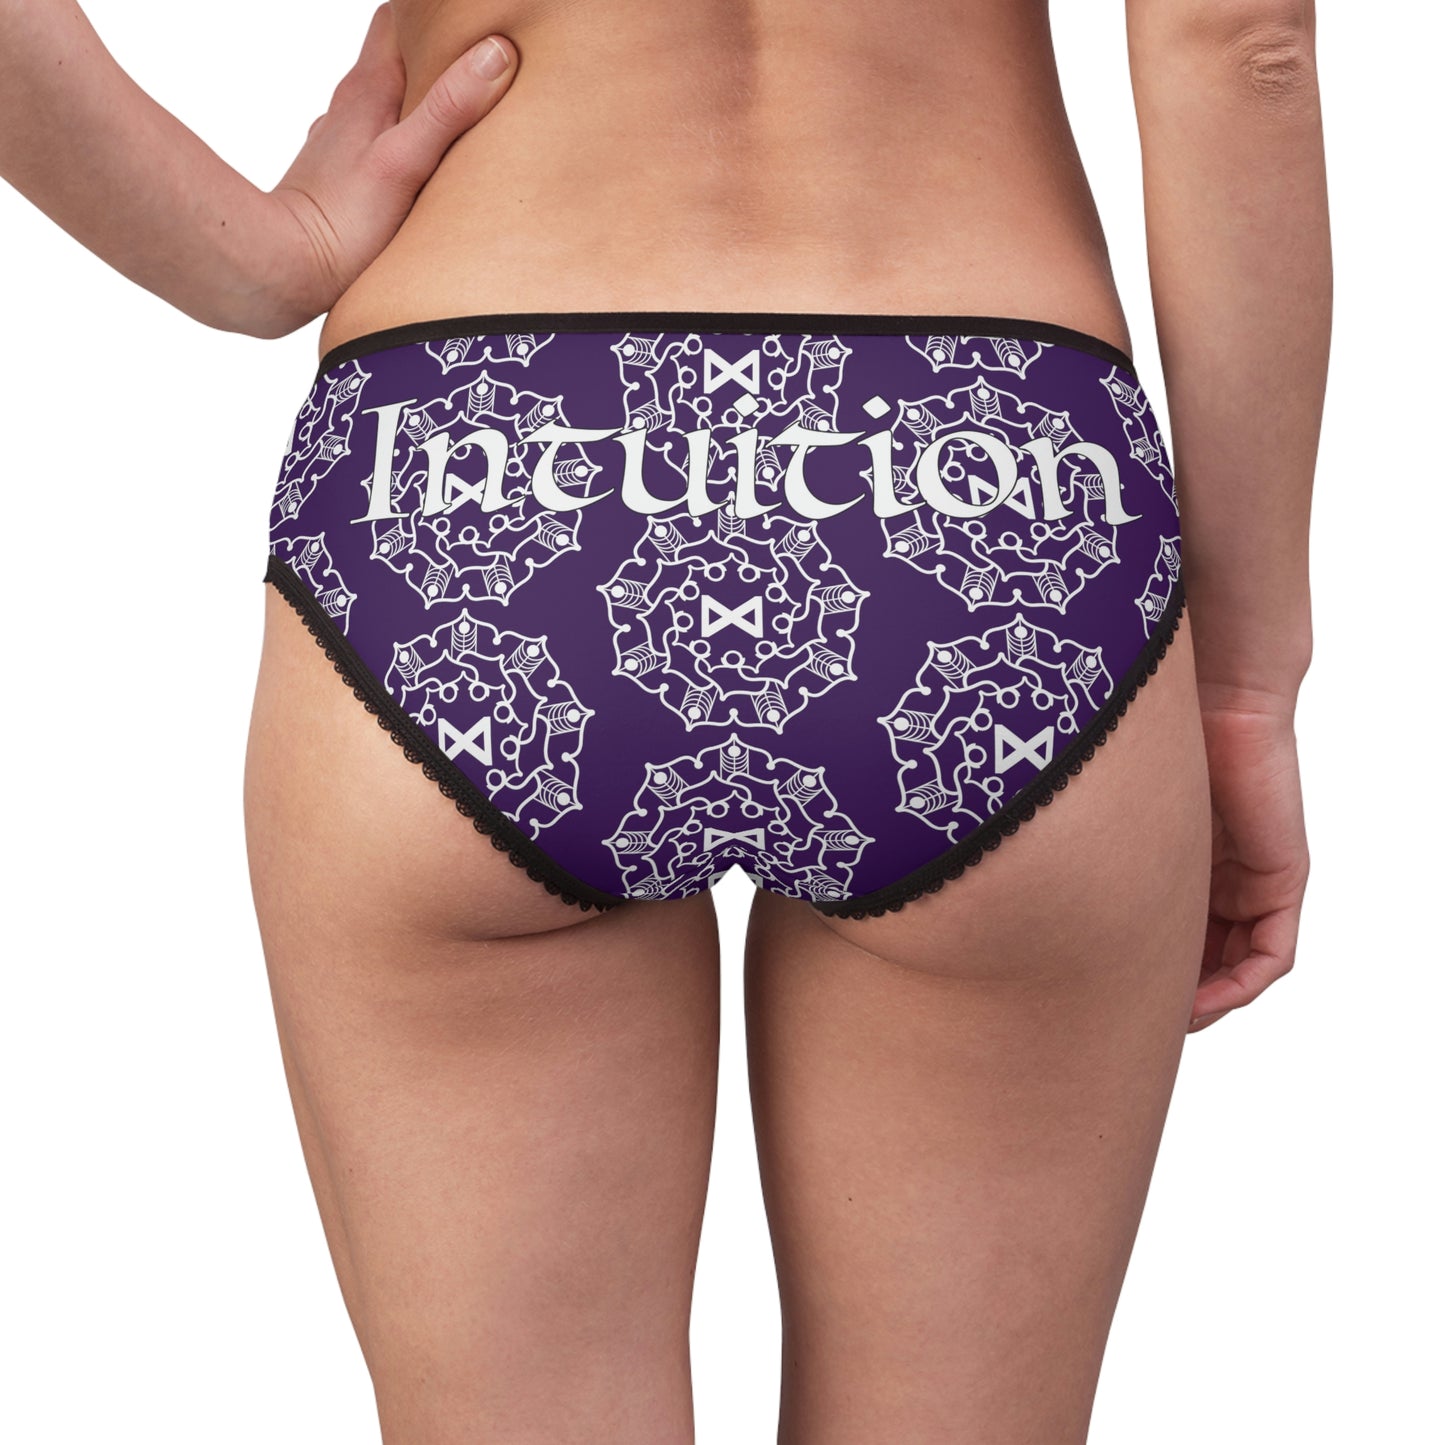 Patti's Power Panties Women's Bikini Brief Panty - "Intuition" with Dagaz sigil in deep purple (Model, back view)